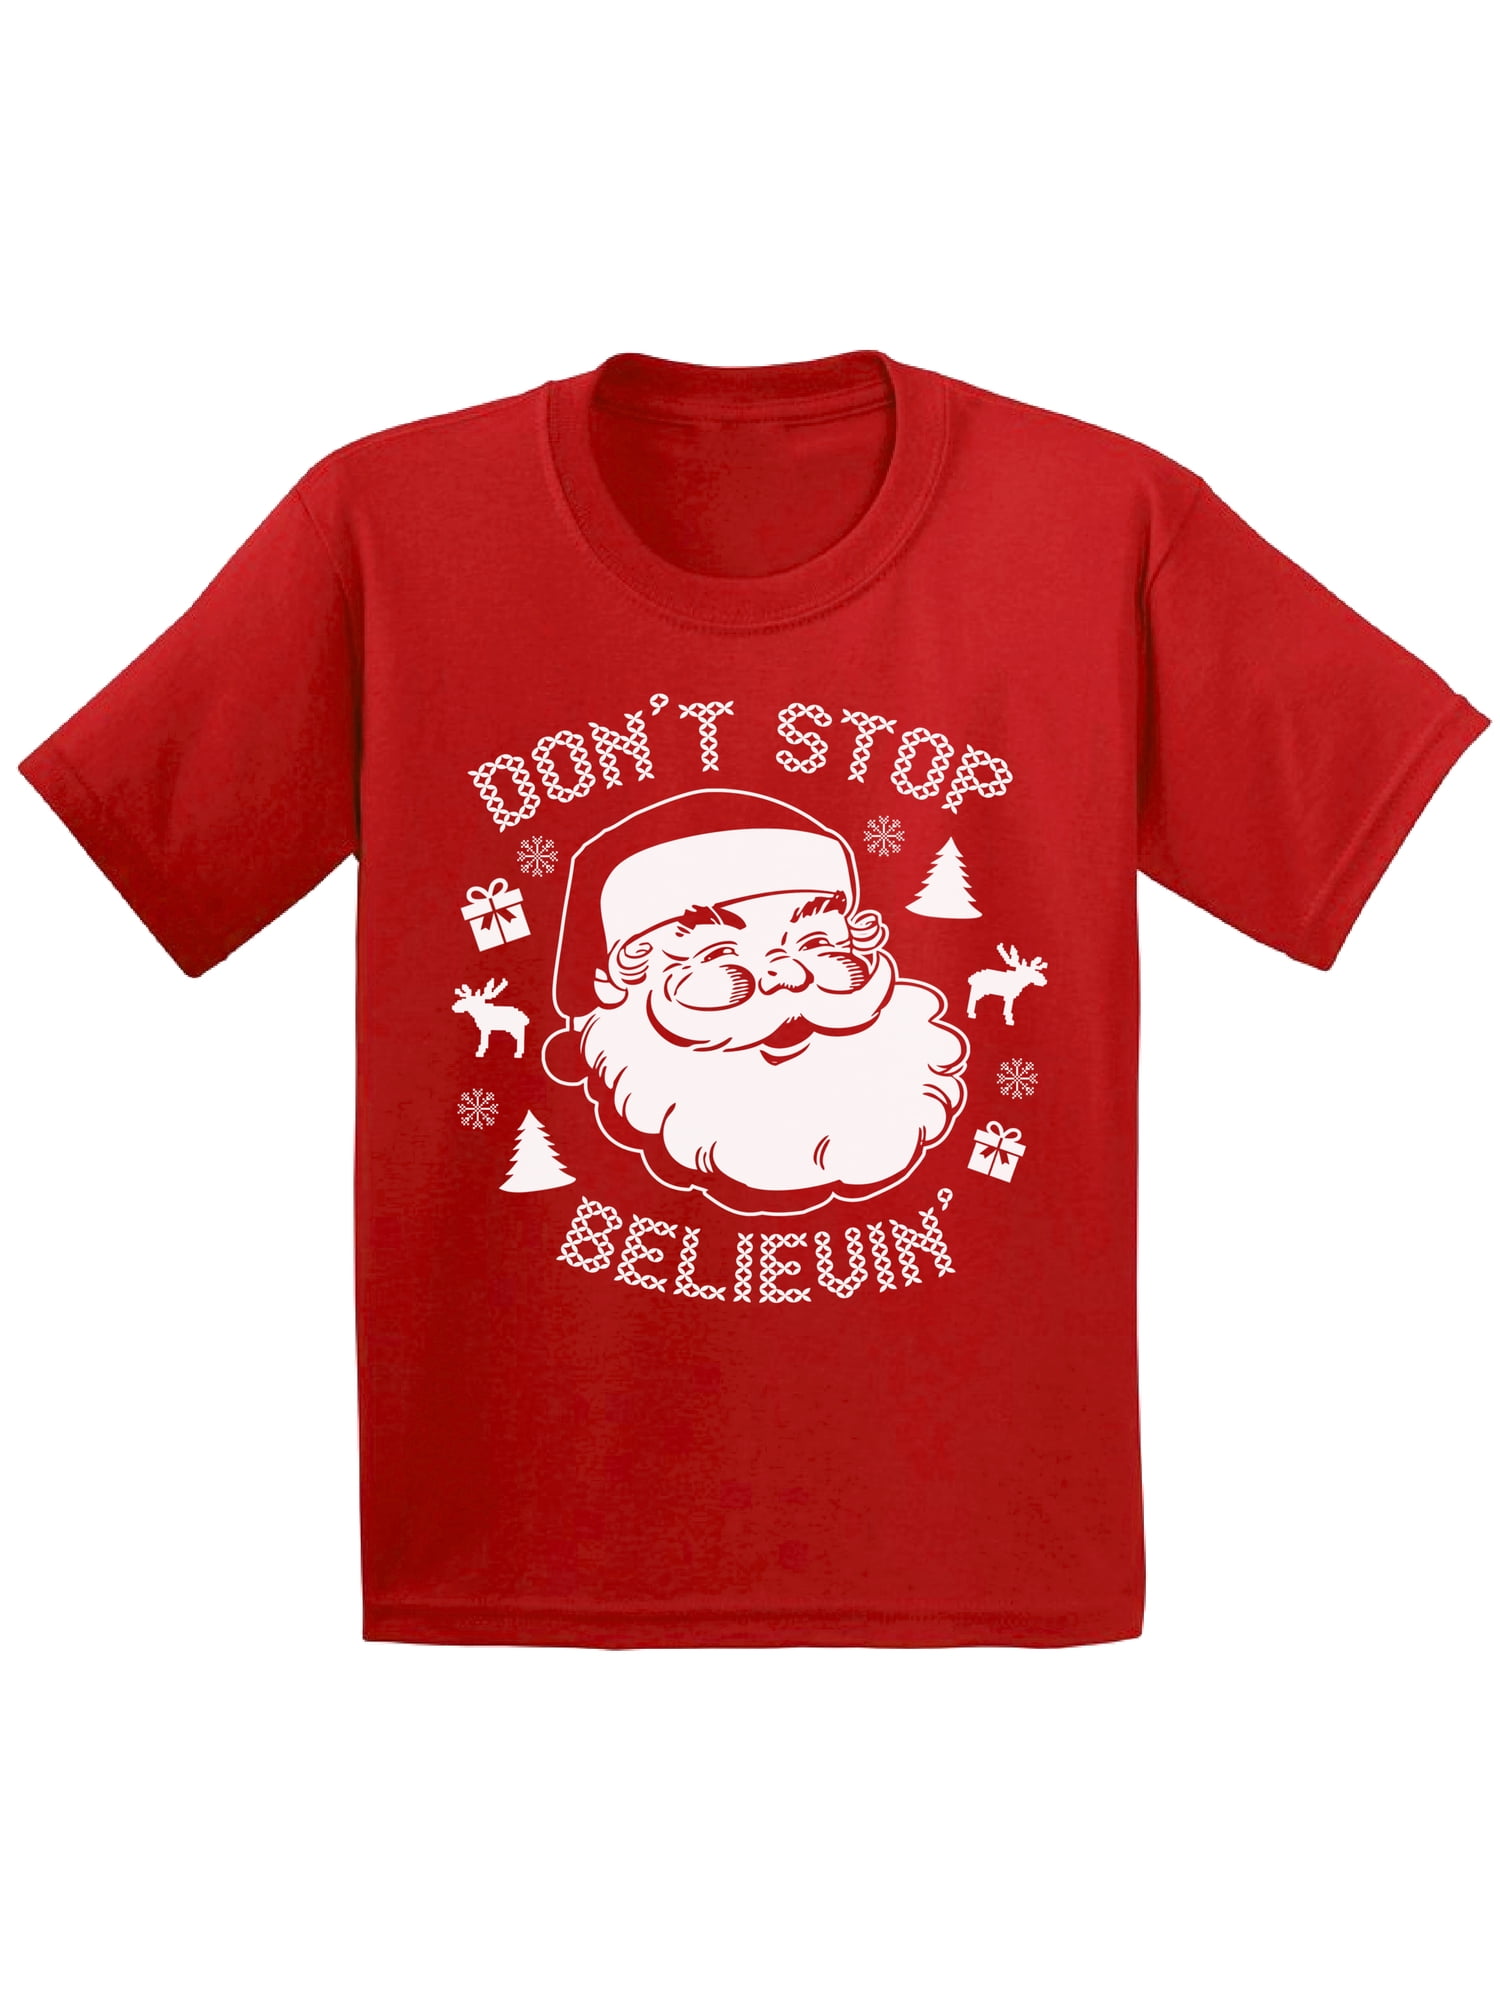 Kleding Jongenskleding Tops & T-shirts T-shirts T-shirts met print Toddler Santa Shirt Toddler Christmas Shirt 